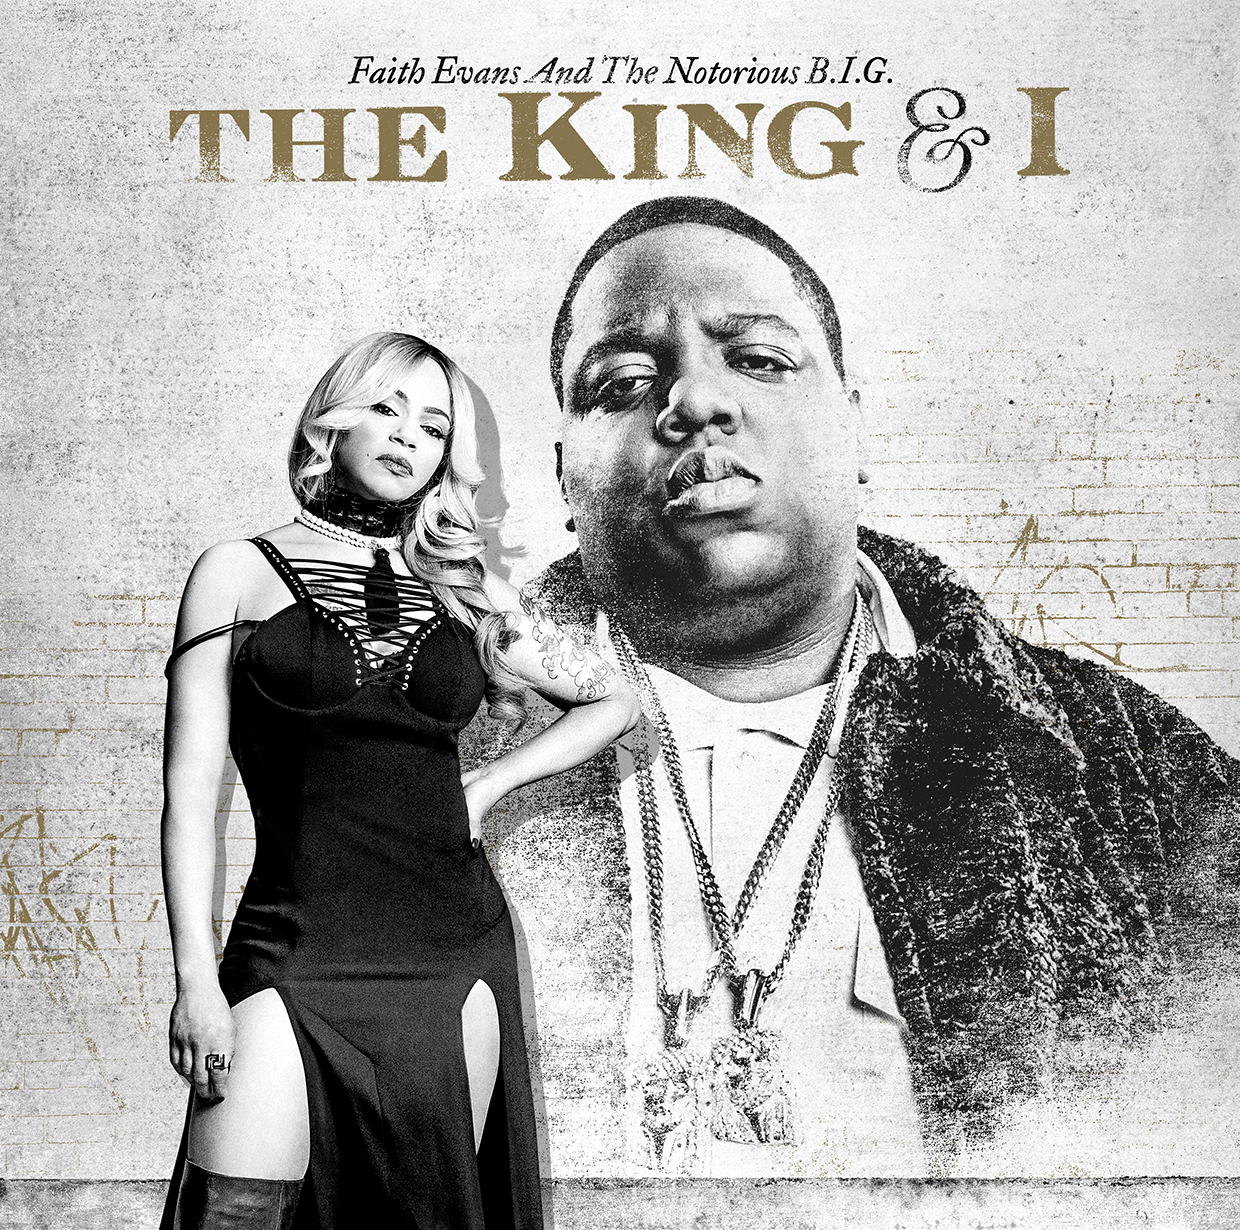 The King & I [Album Stream]